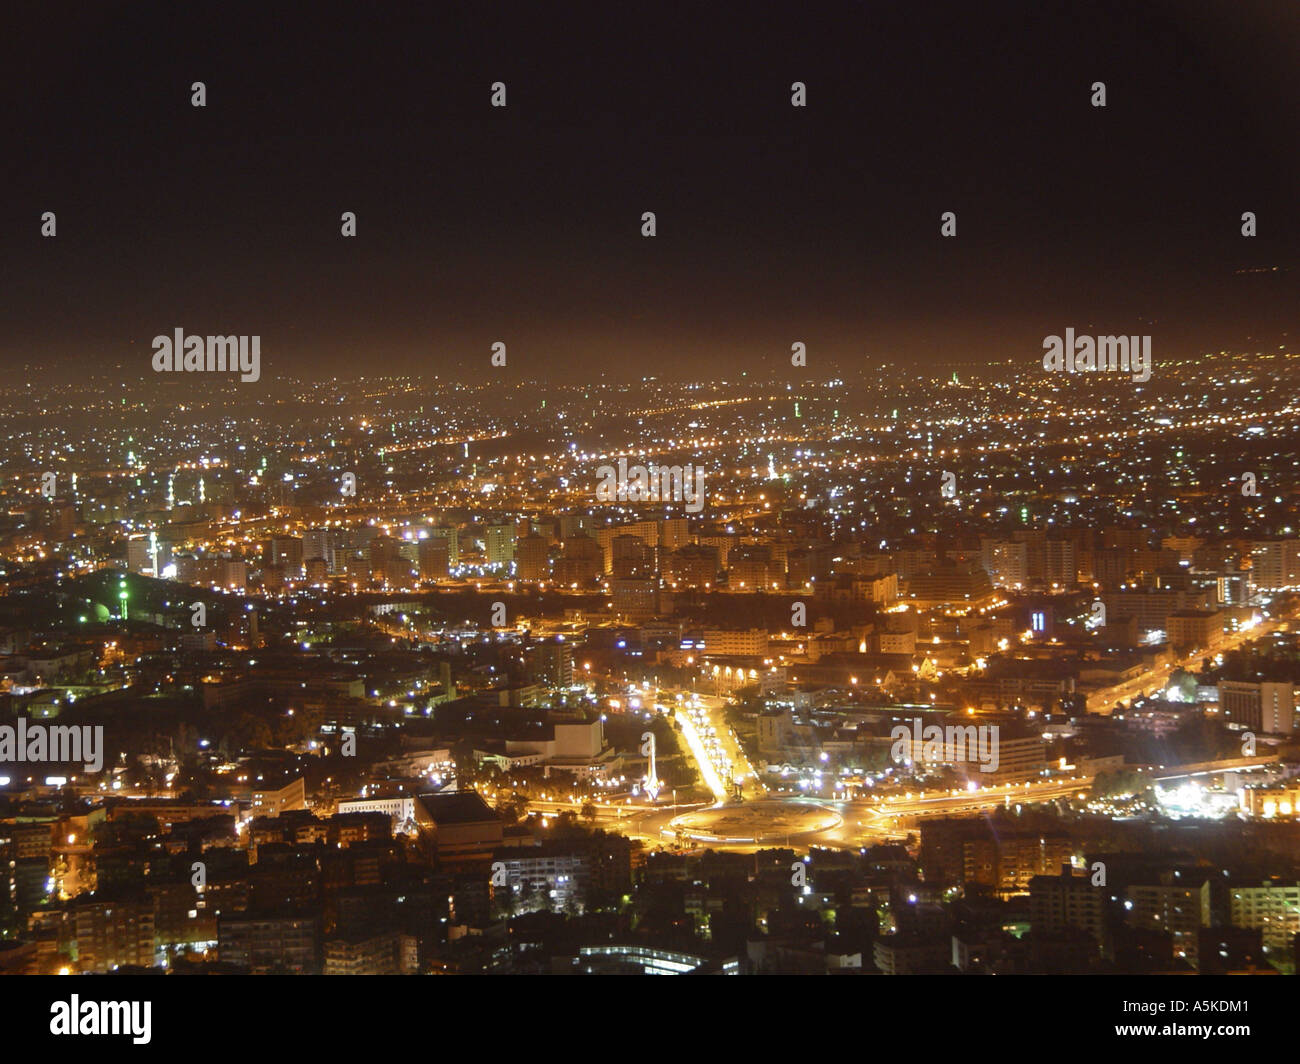 View from Qasyun over damascus, damascus at night Stock Photo